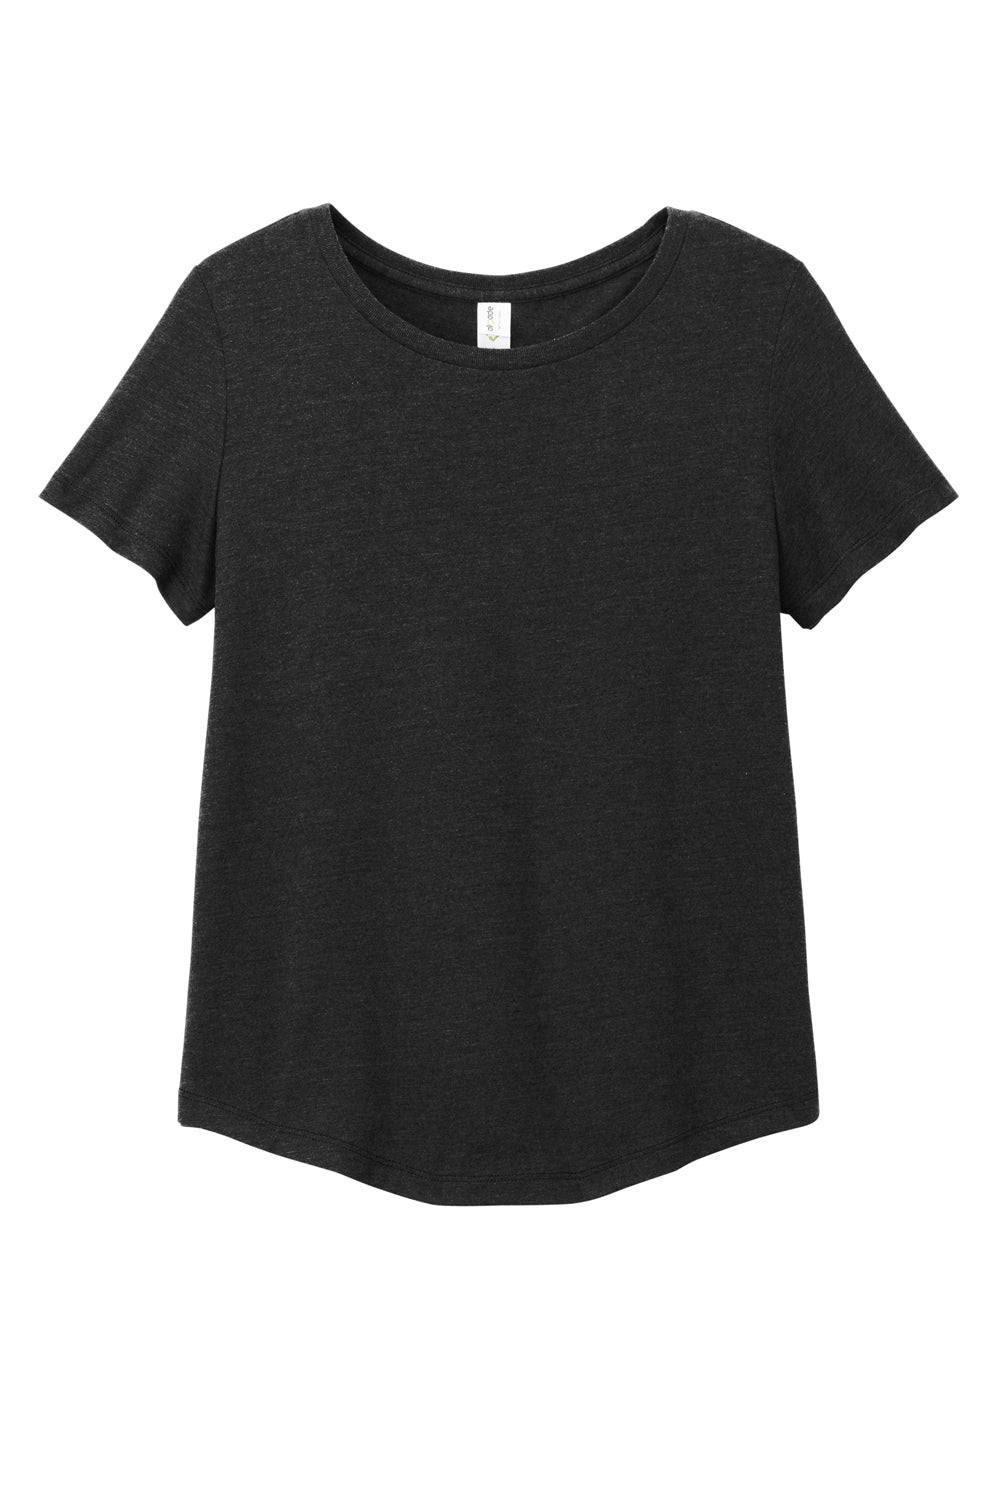 Allmade AL2015 Womens Short Sleeve Scoop Neck T Shirt Space Black Flat Front